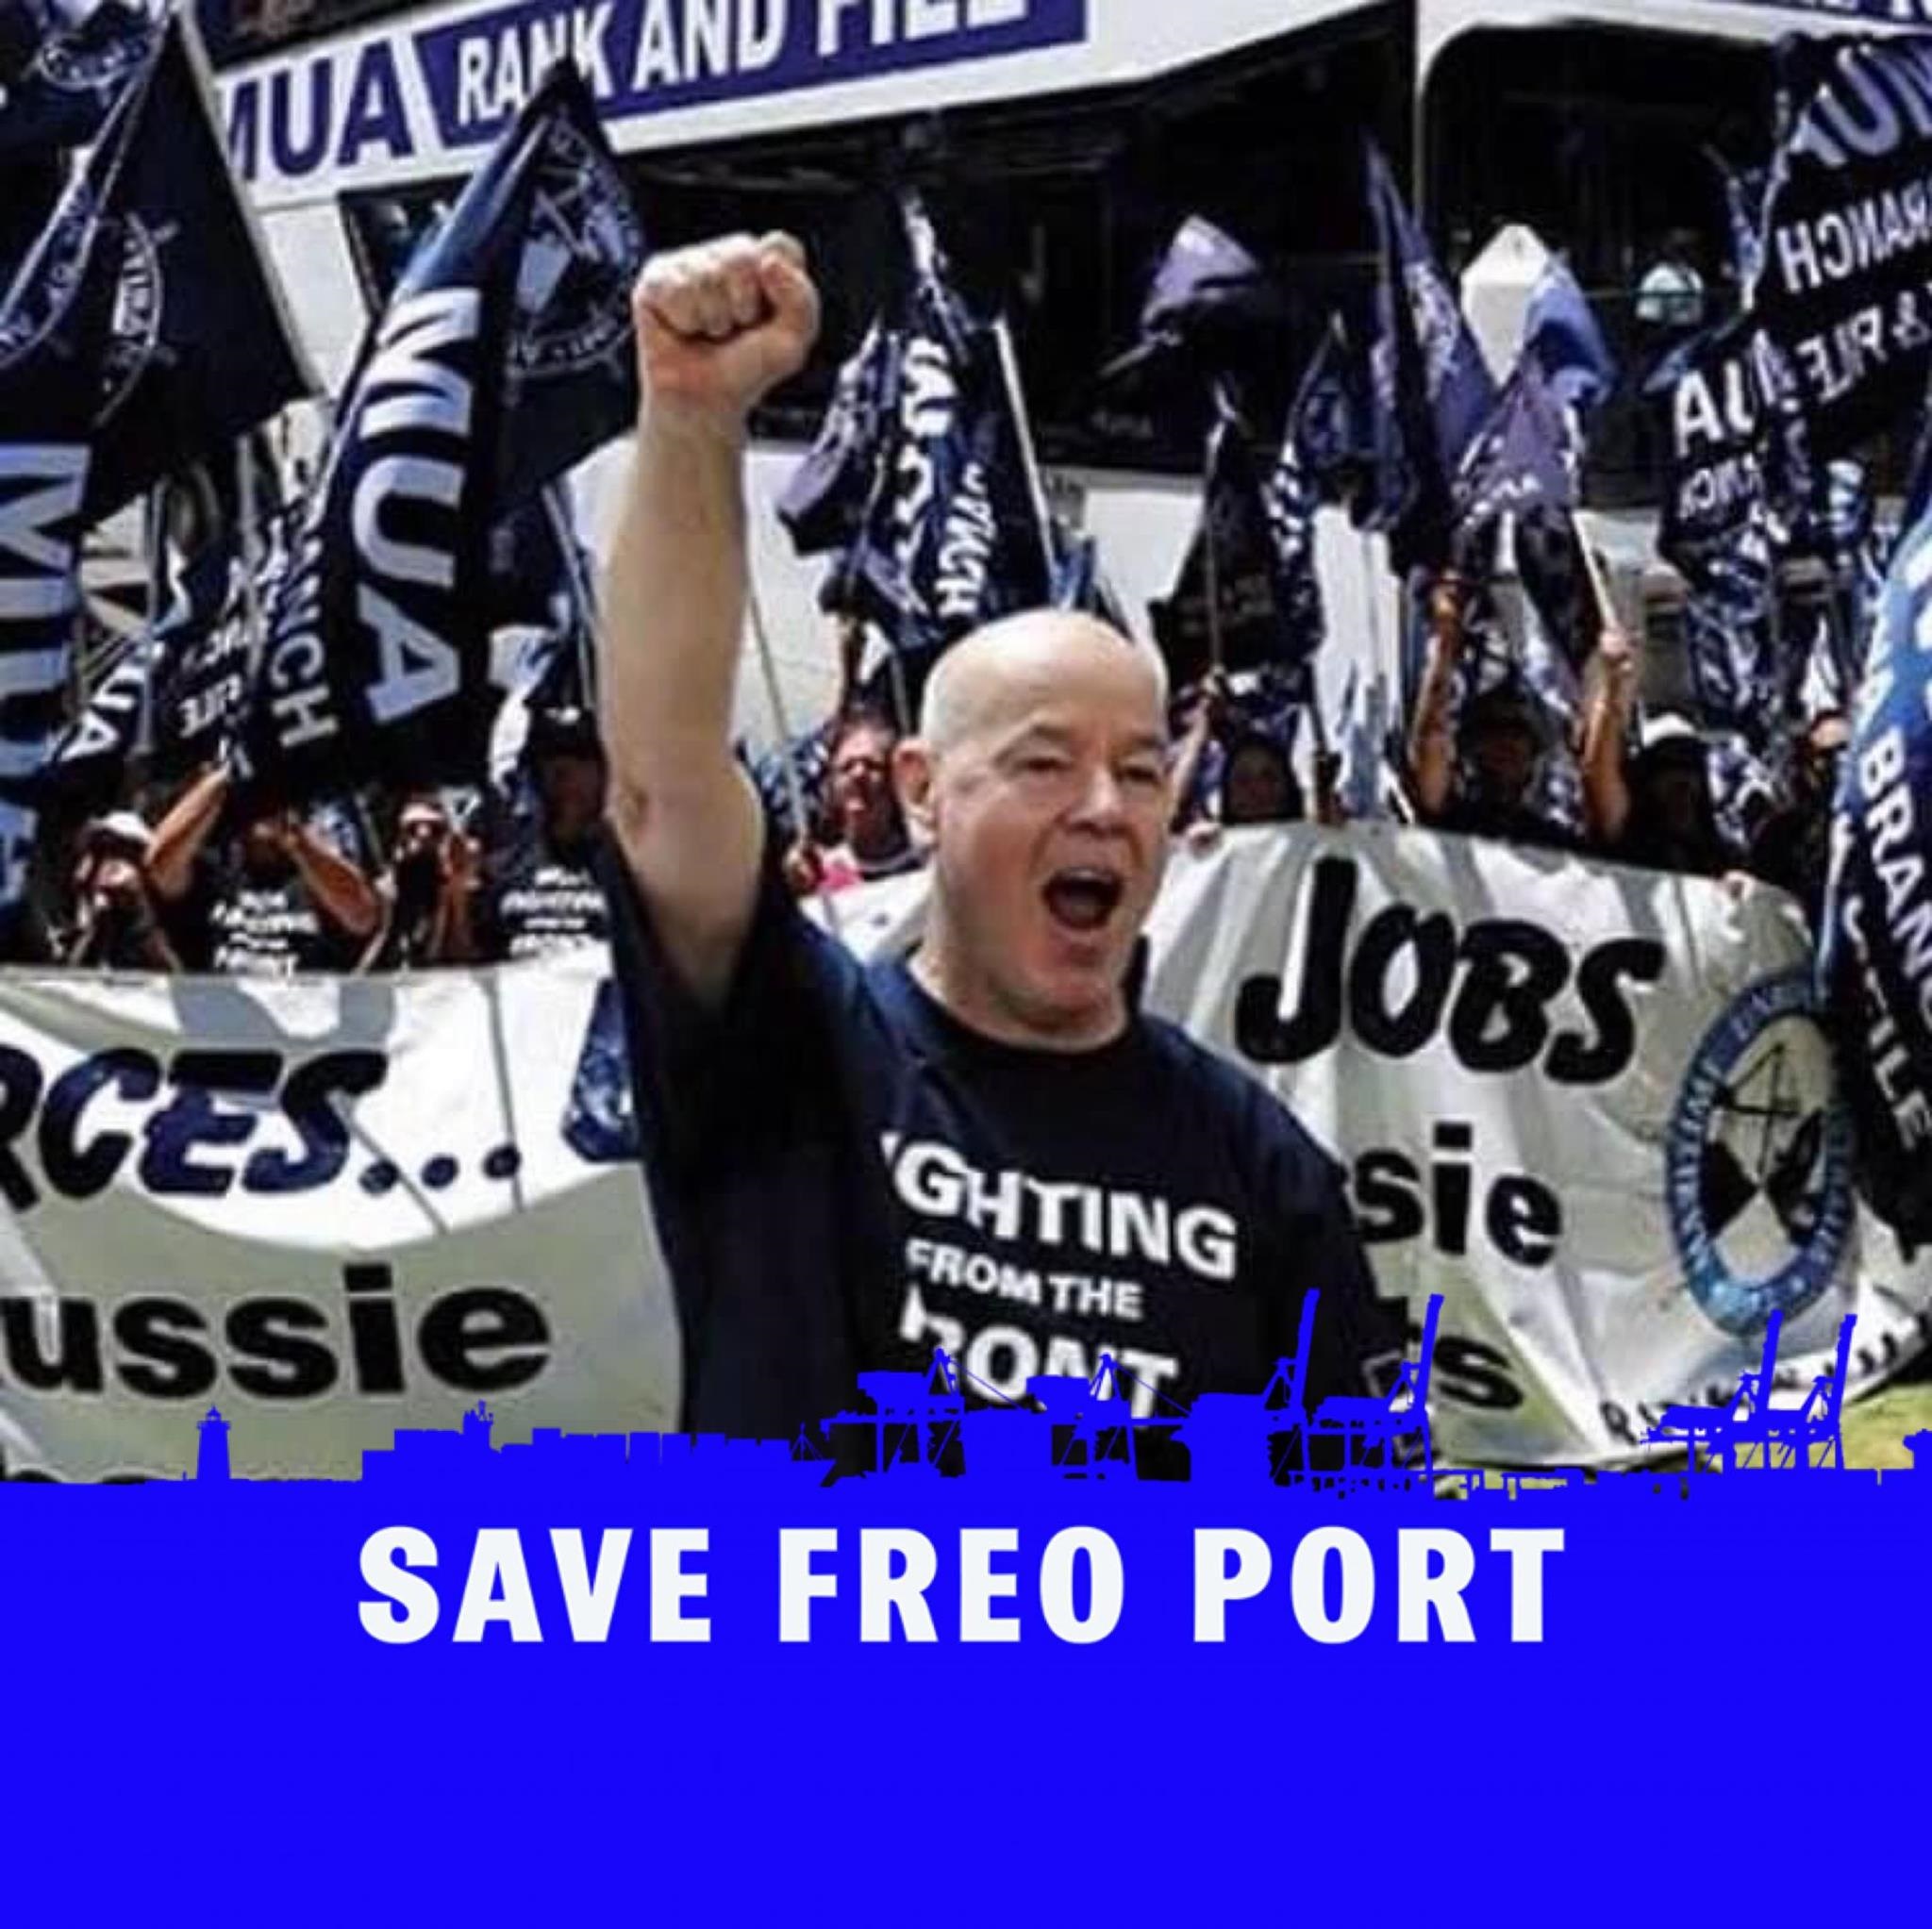 Chris Cain Freo Port Campaign